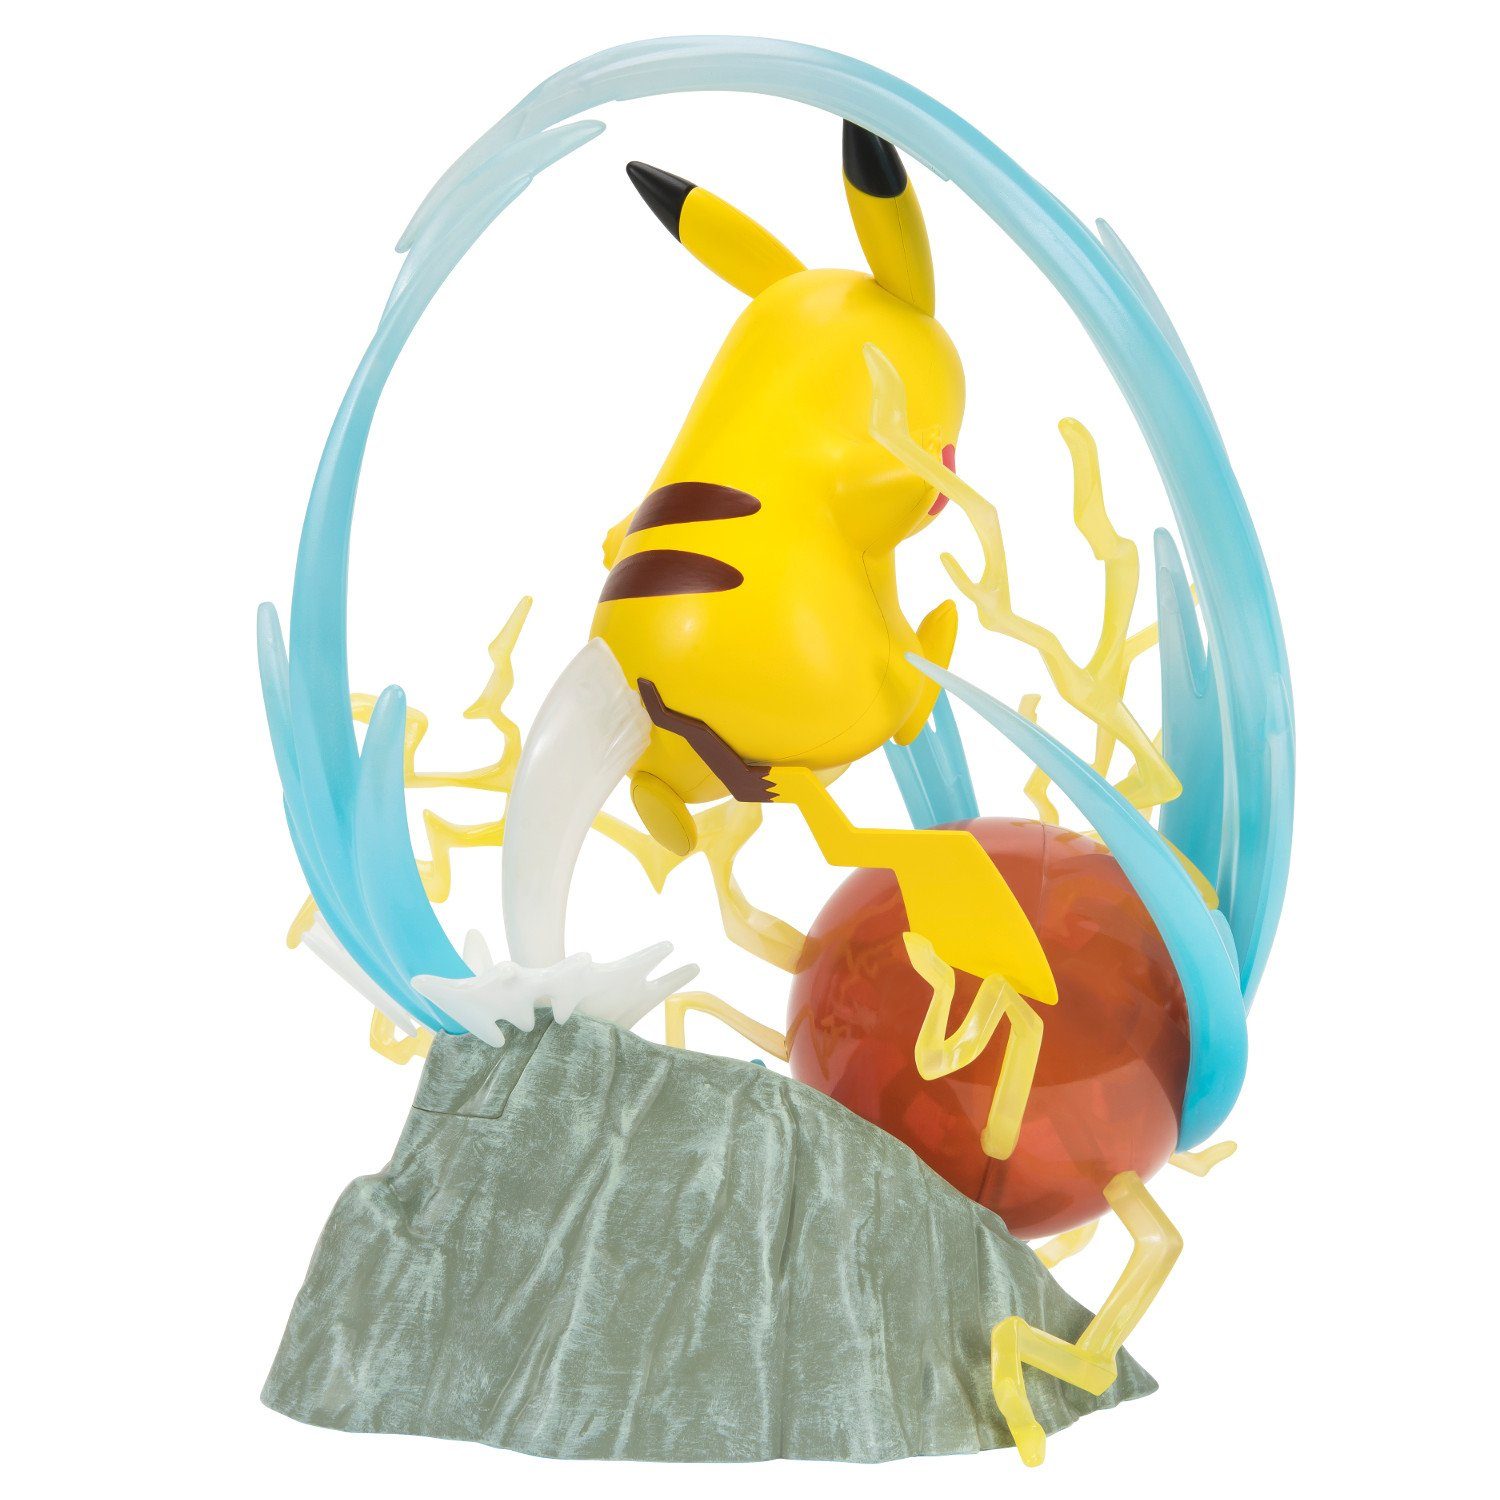 Jazwares Spielfigur PKW2370, Sammlerfigur Deluxe Pikachu Pokemon